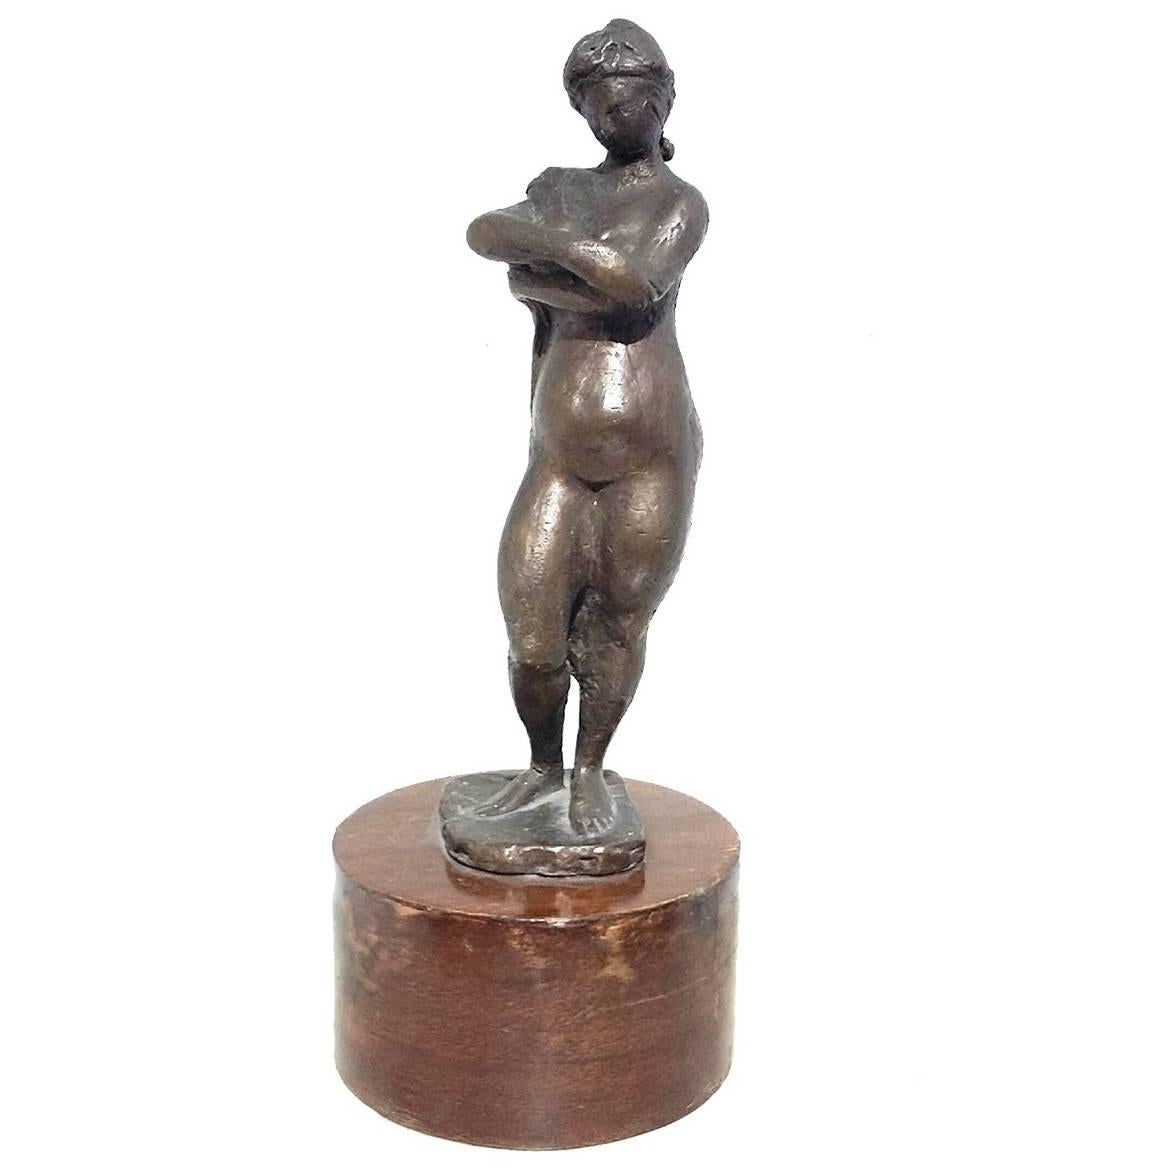 Bronze Sculpture “Woman’s Nude” by Giuseppe Mazzullo, Italy, 1944